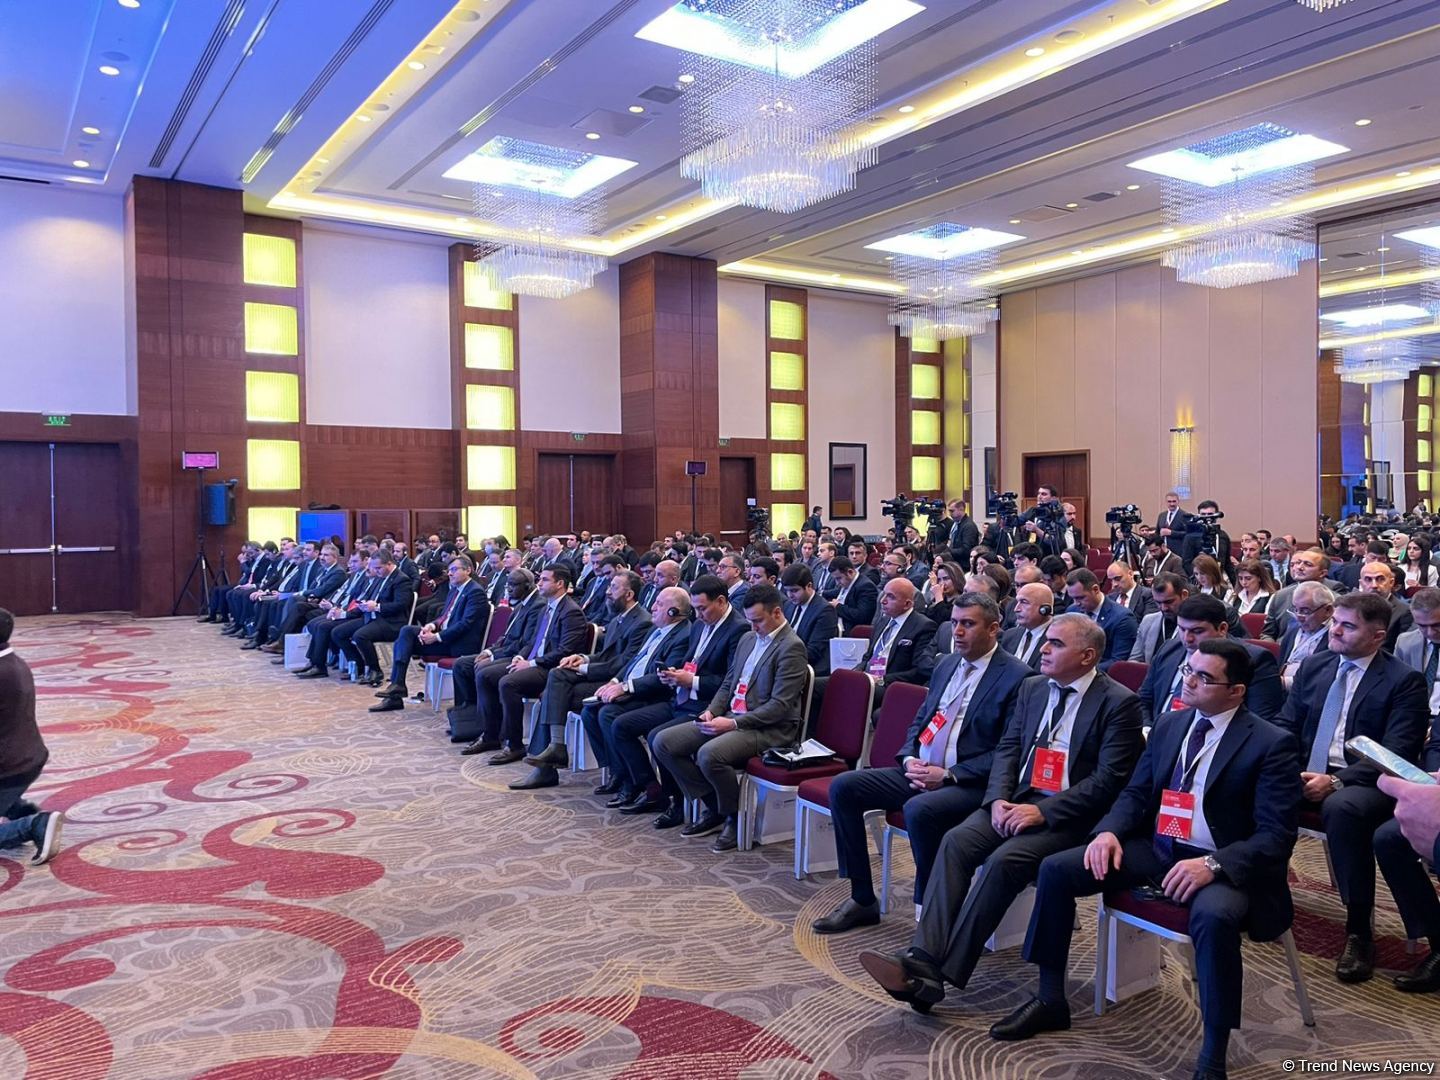 Azerbaijan Investment, Youth Entrepreneurship Forum taking place in Baku (PHOTO)